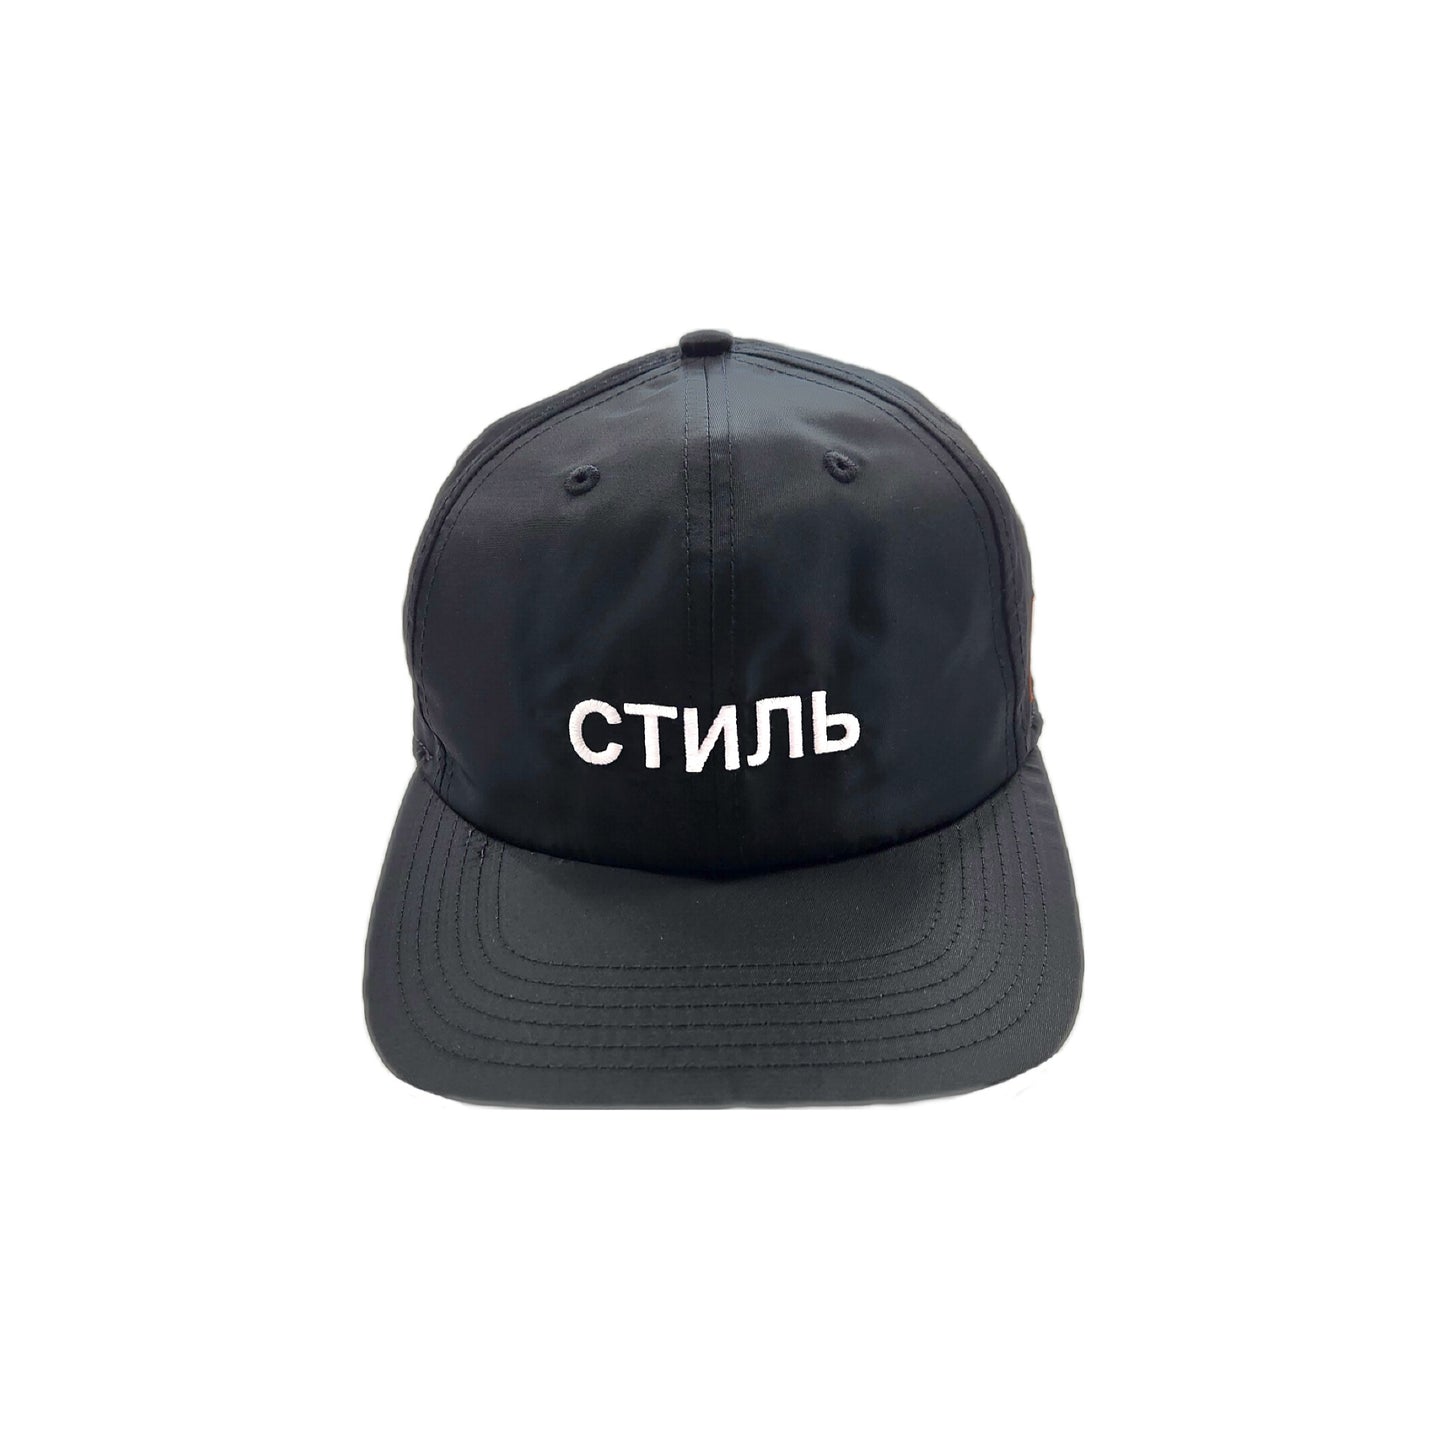 【HERON PRESTON】CTNMB CAP